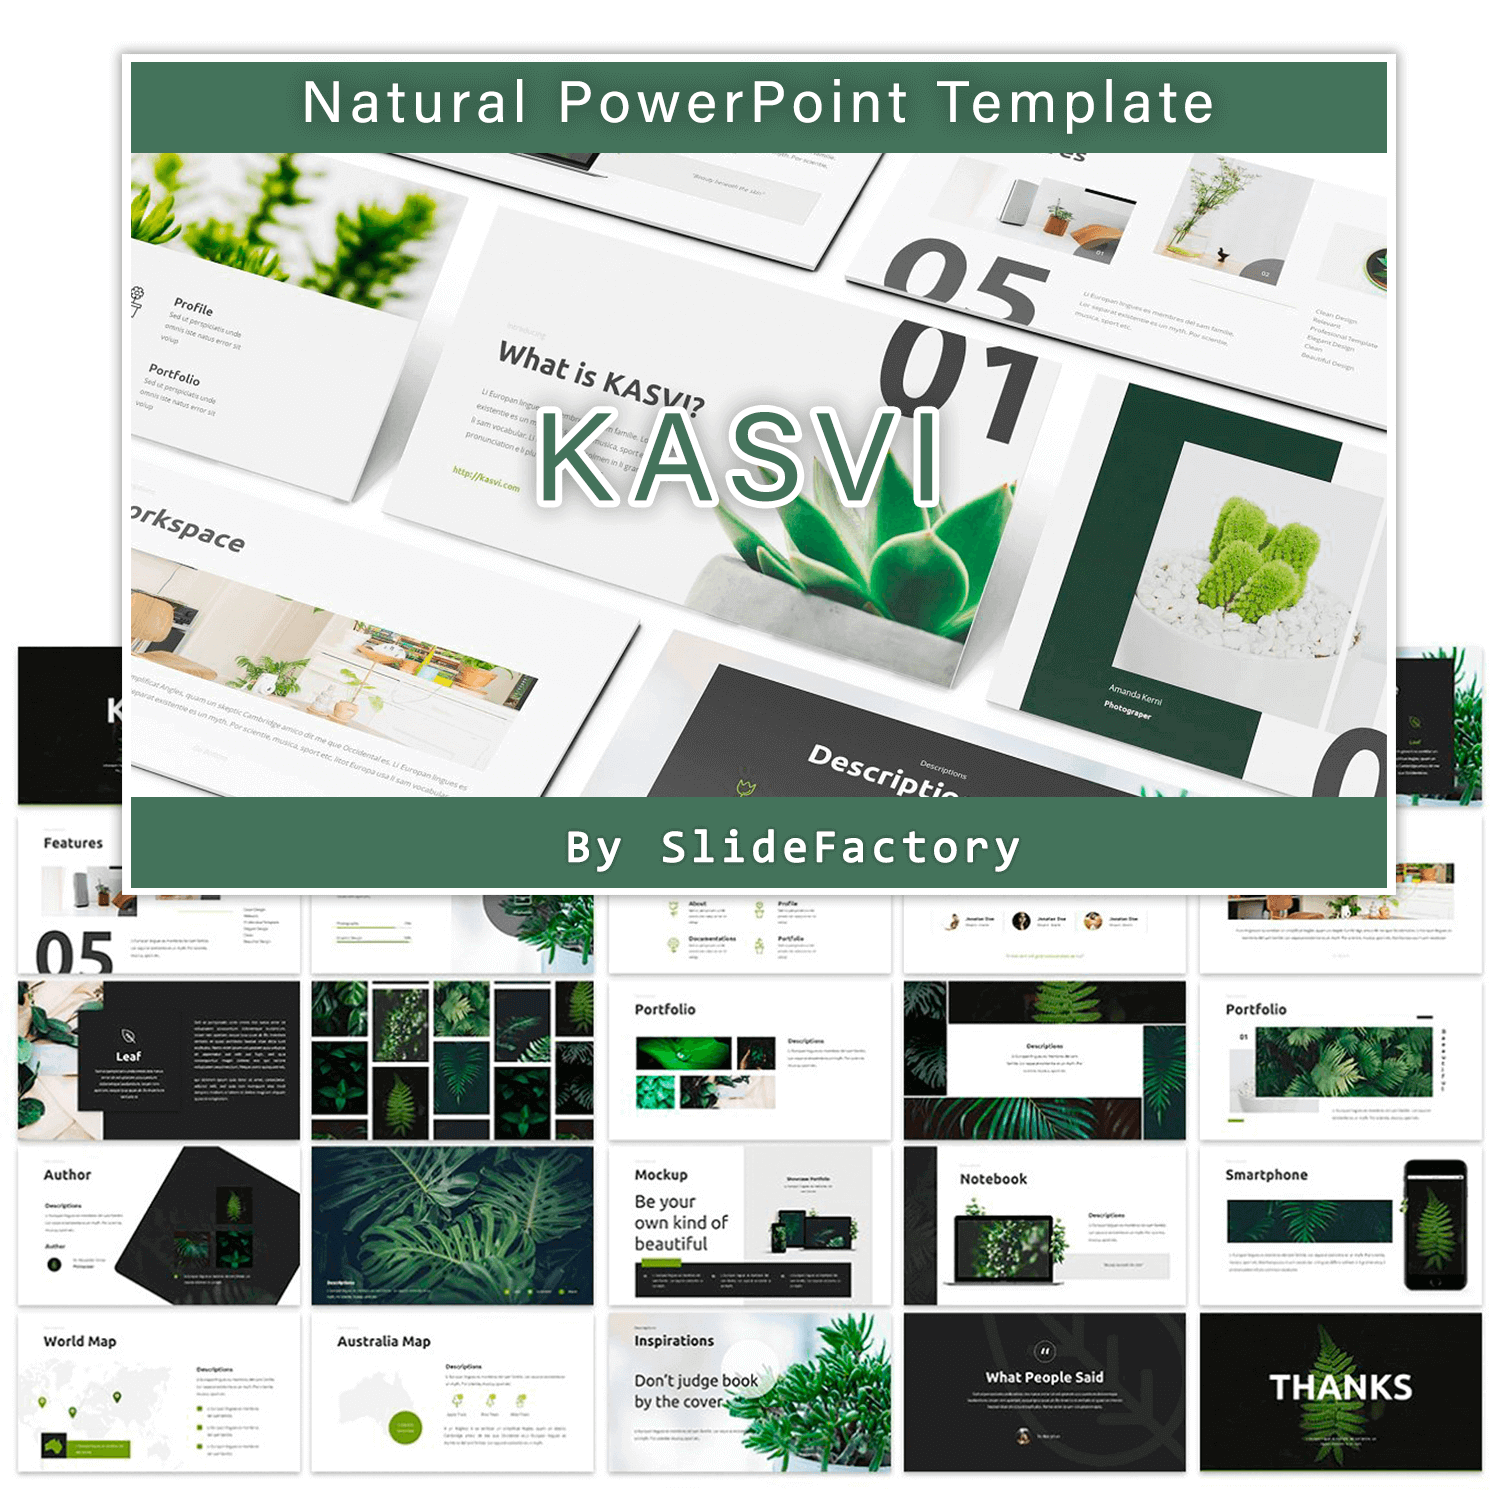 Natural PowerPoint Template Kasvi.